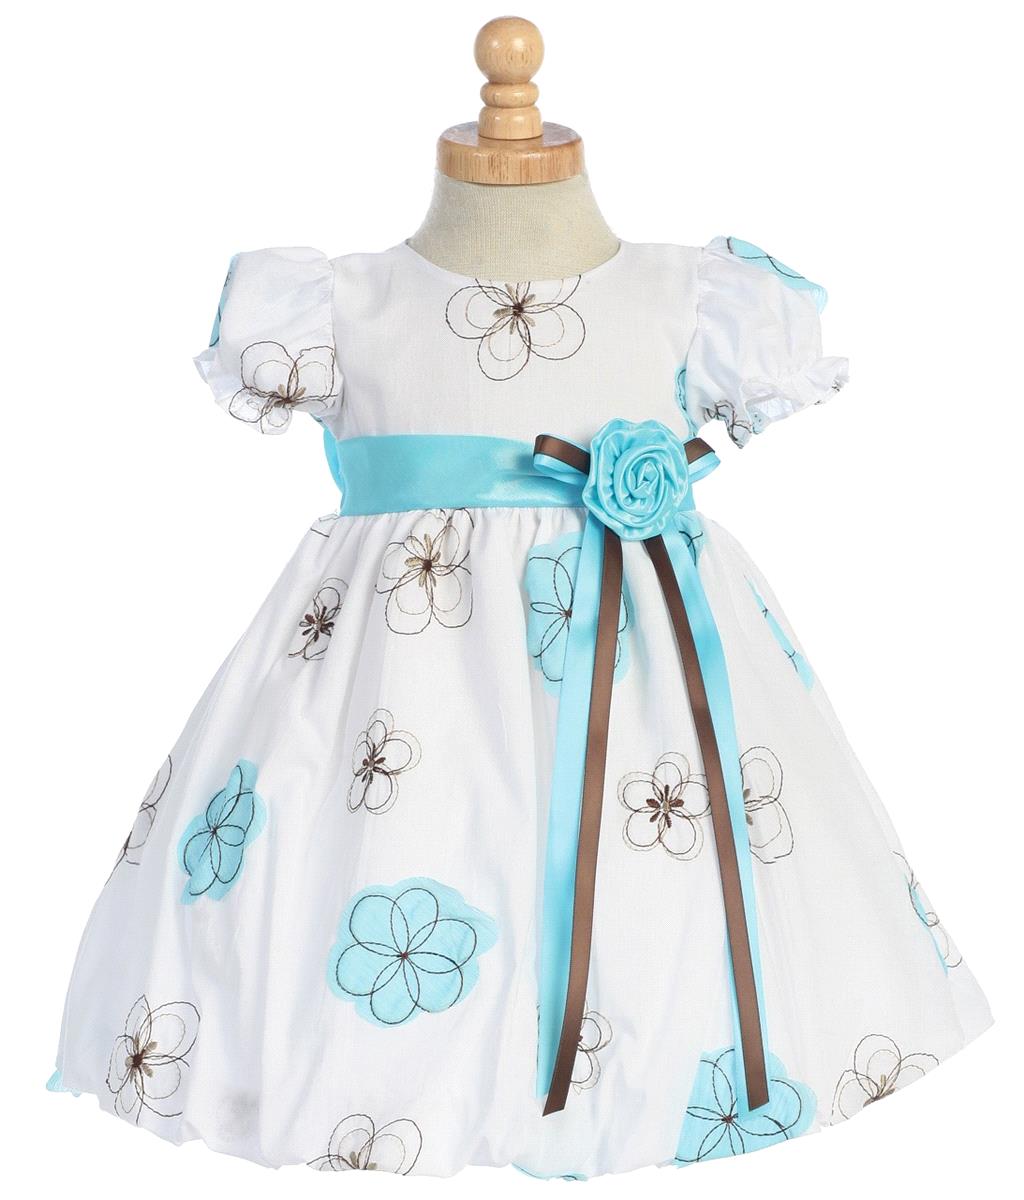 My Stuff, https://www.paraprinting.com/blue/2298-blue-embroidered-cotton-baby-dress-w-taffeta-waistb